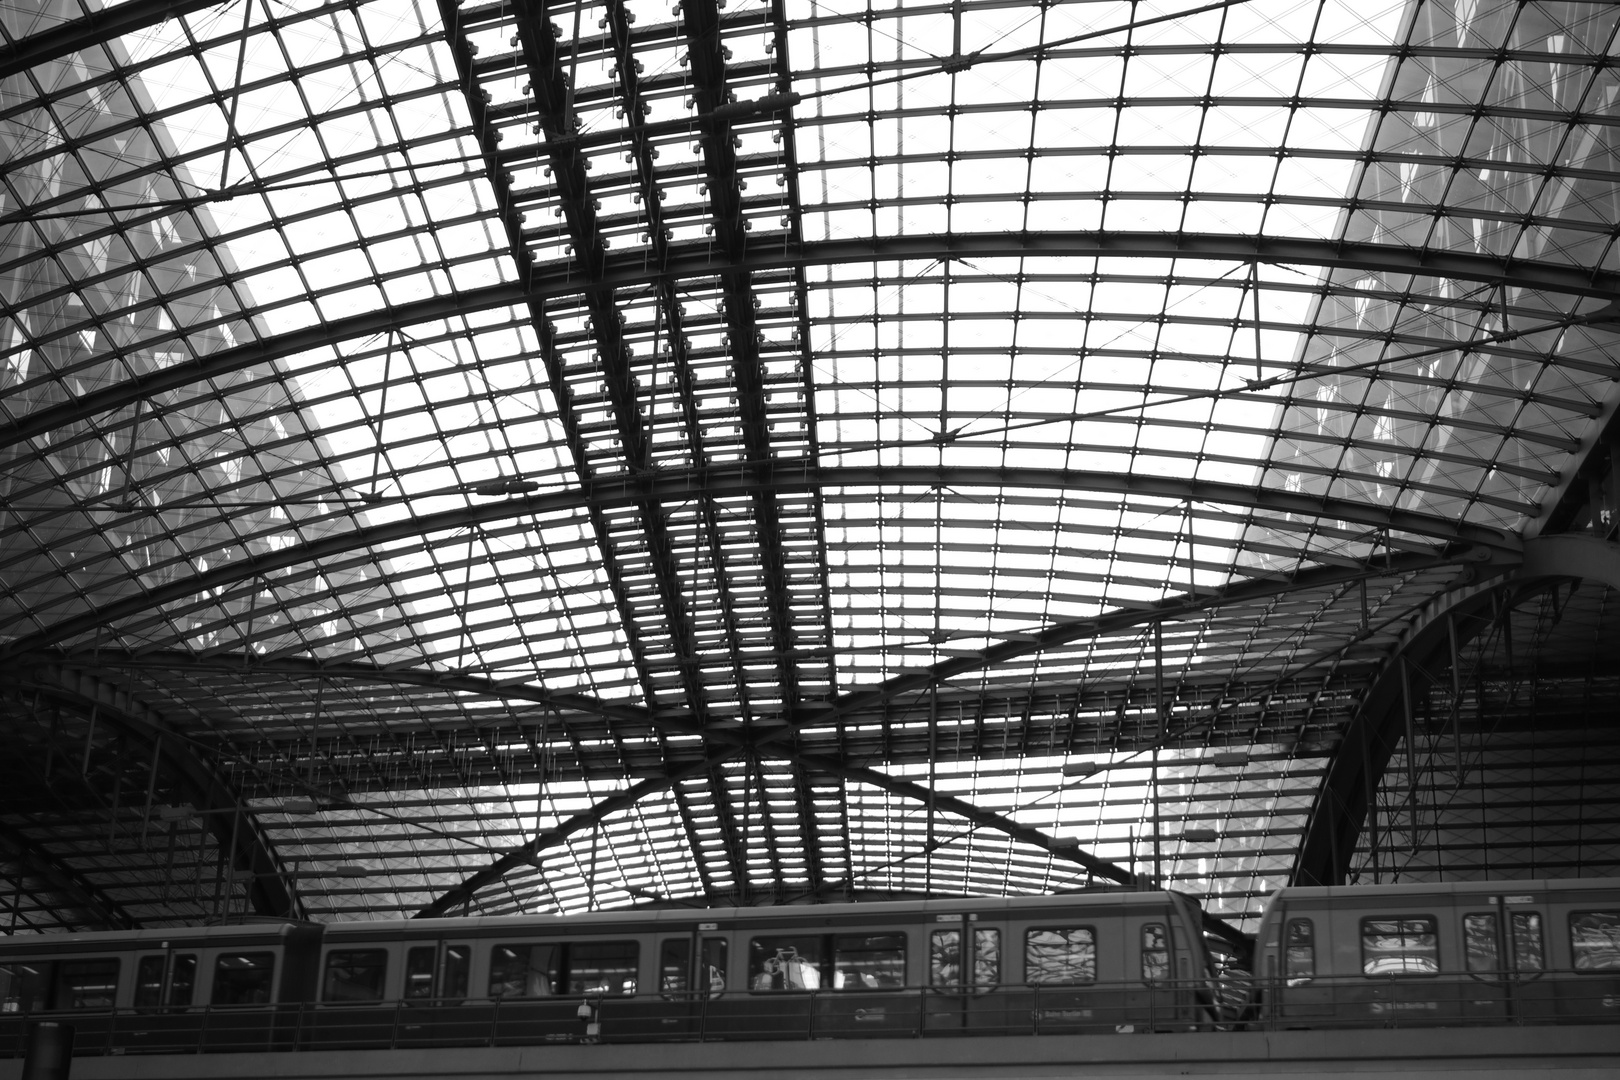 Berlin Lehrter Bahnhof